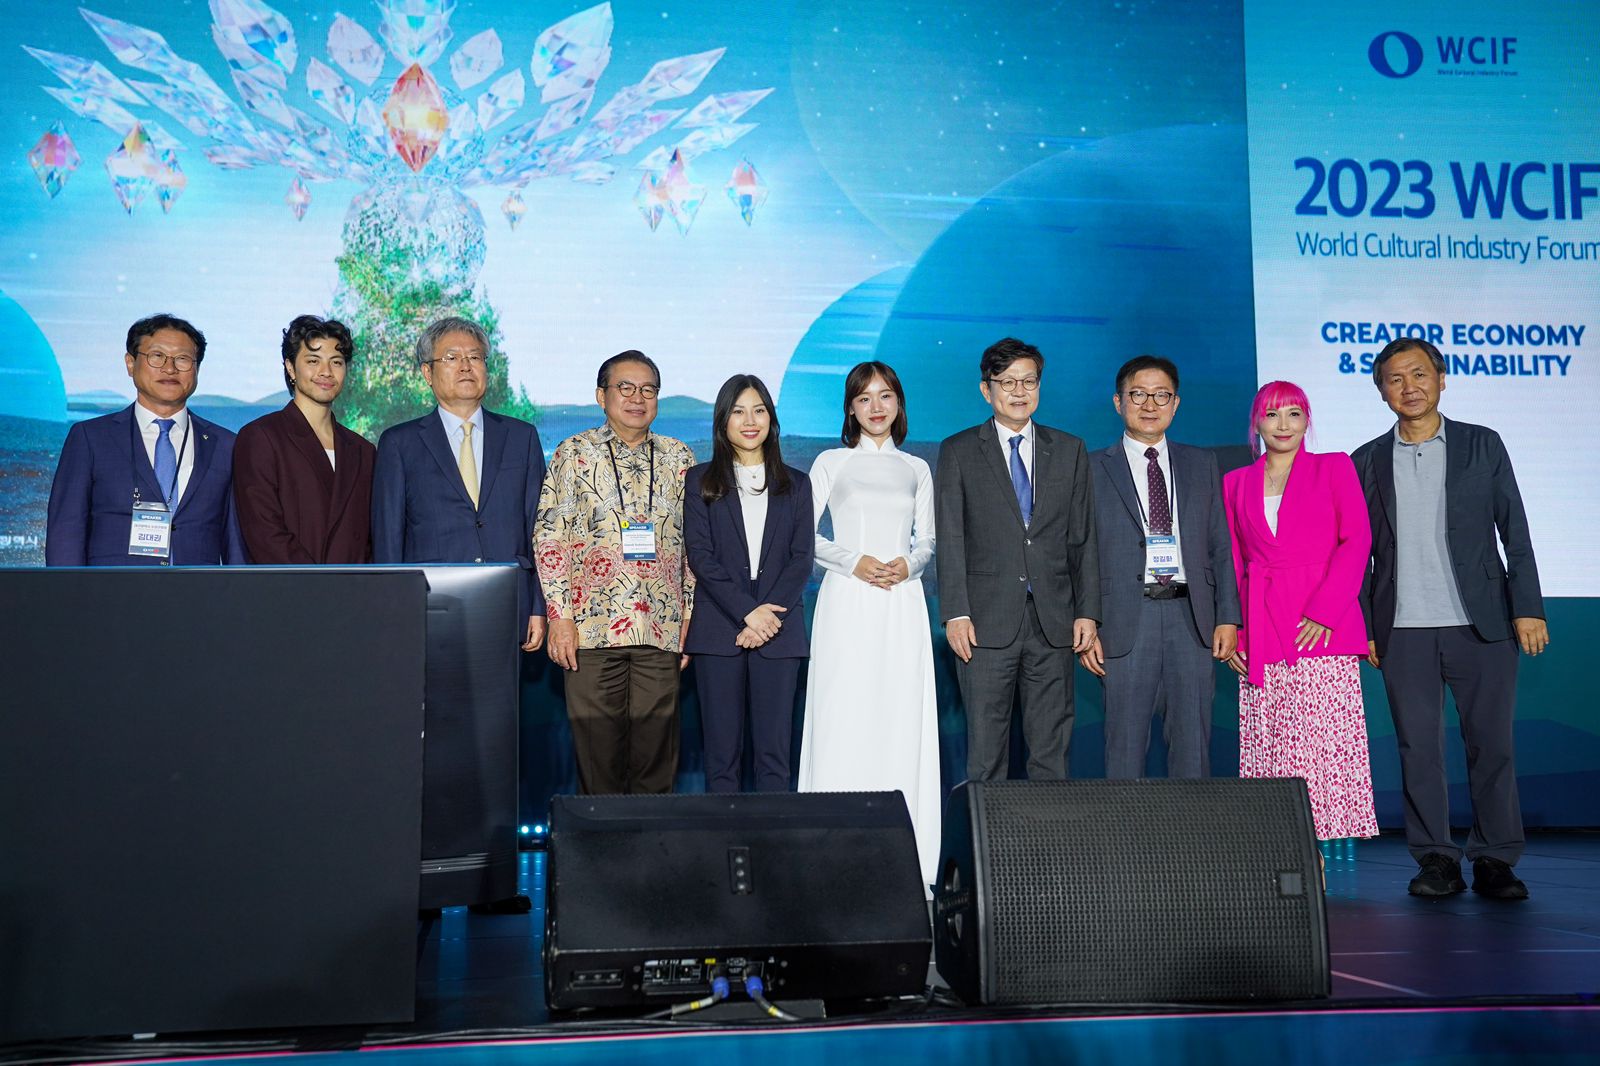 Siaran Pers: Wamenparekraf Sampaikan Kebangkitan Ekonomi Kreatif Indonesia dalam WCIF 2023 di Daegu, Korea Selatan